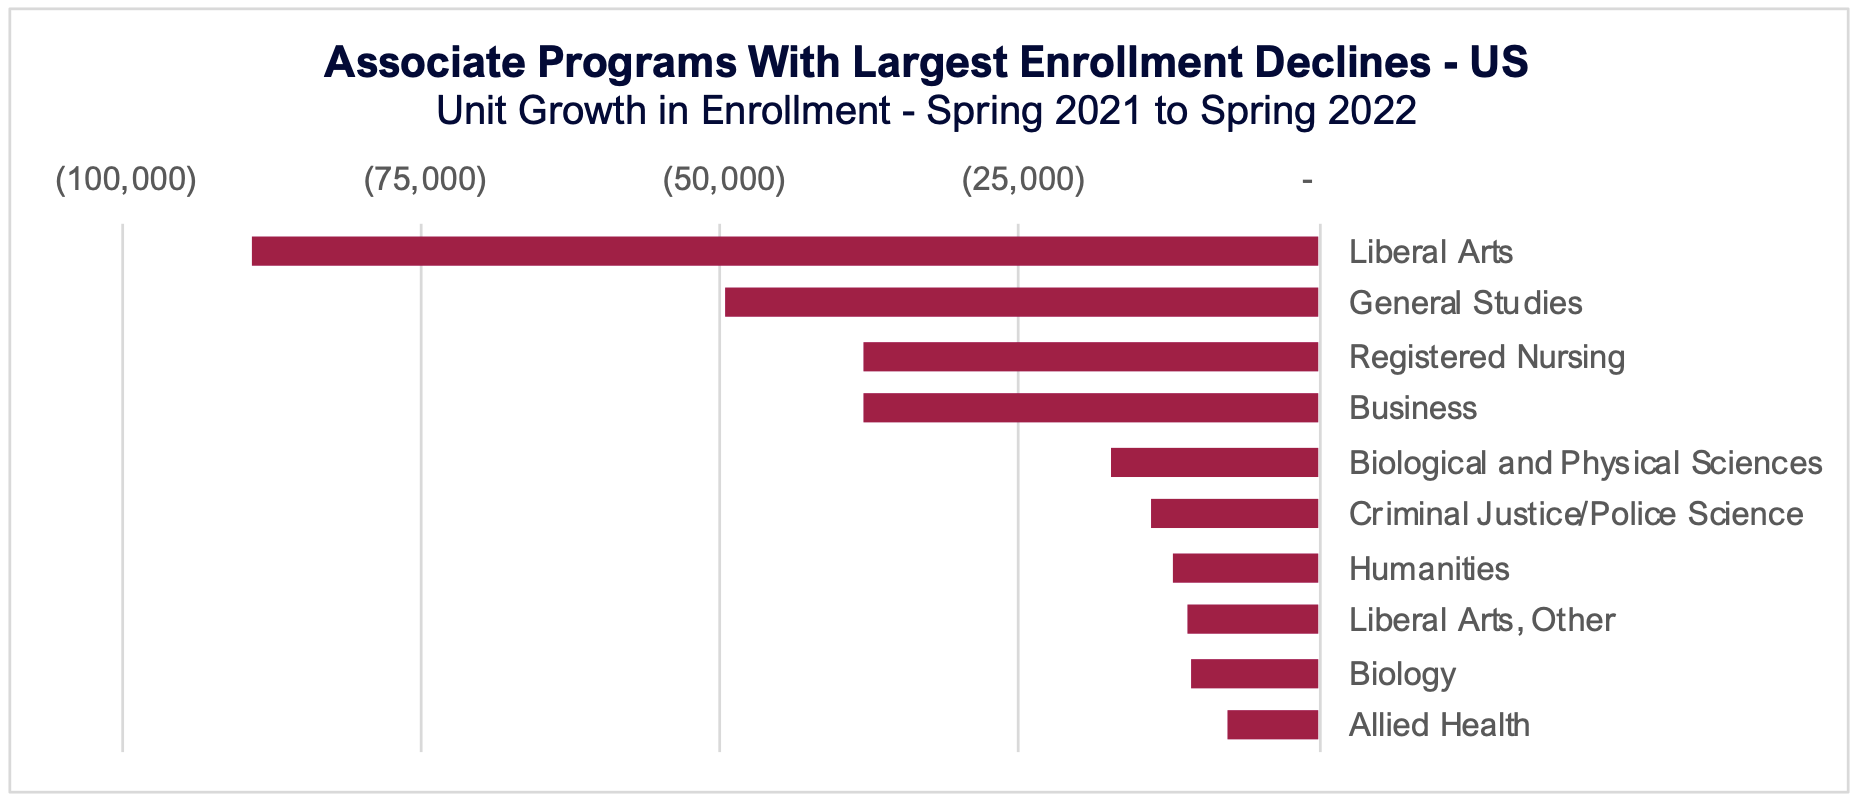 Associate programs with the largest enrollment declines - US